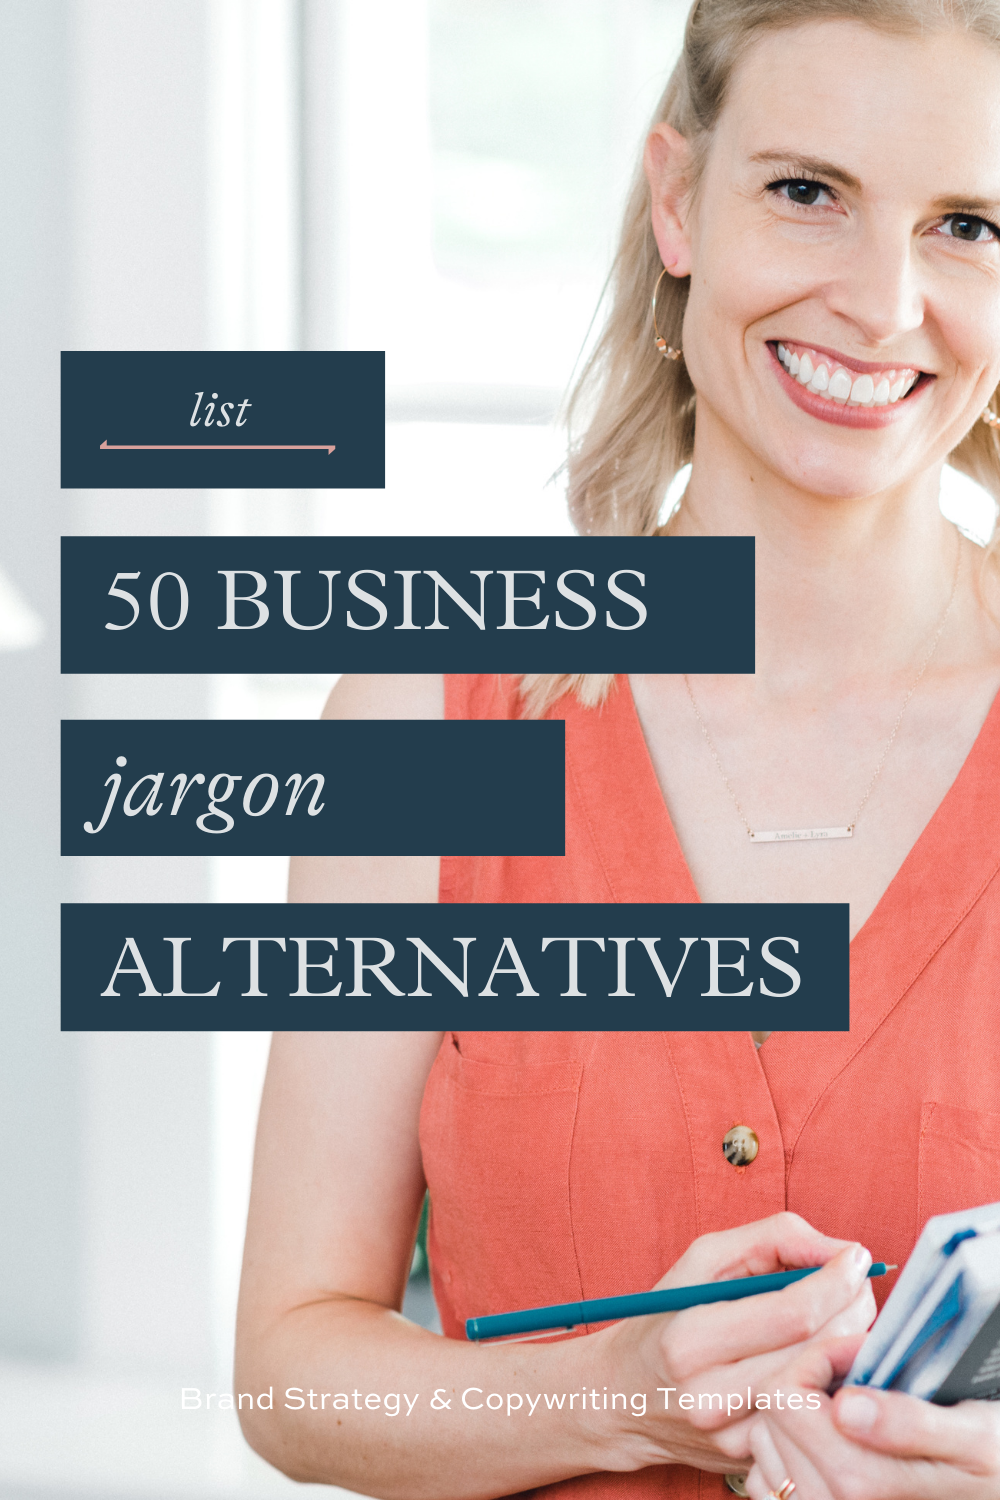 50-business-jargon-alternatives